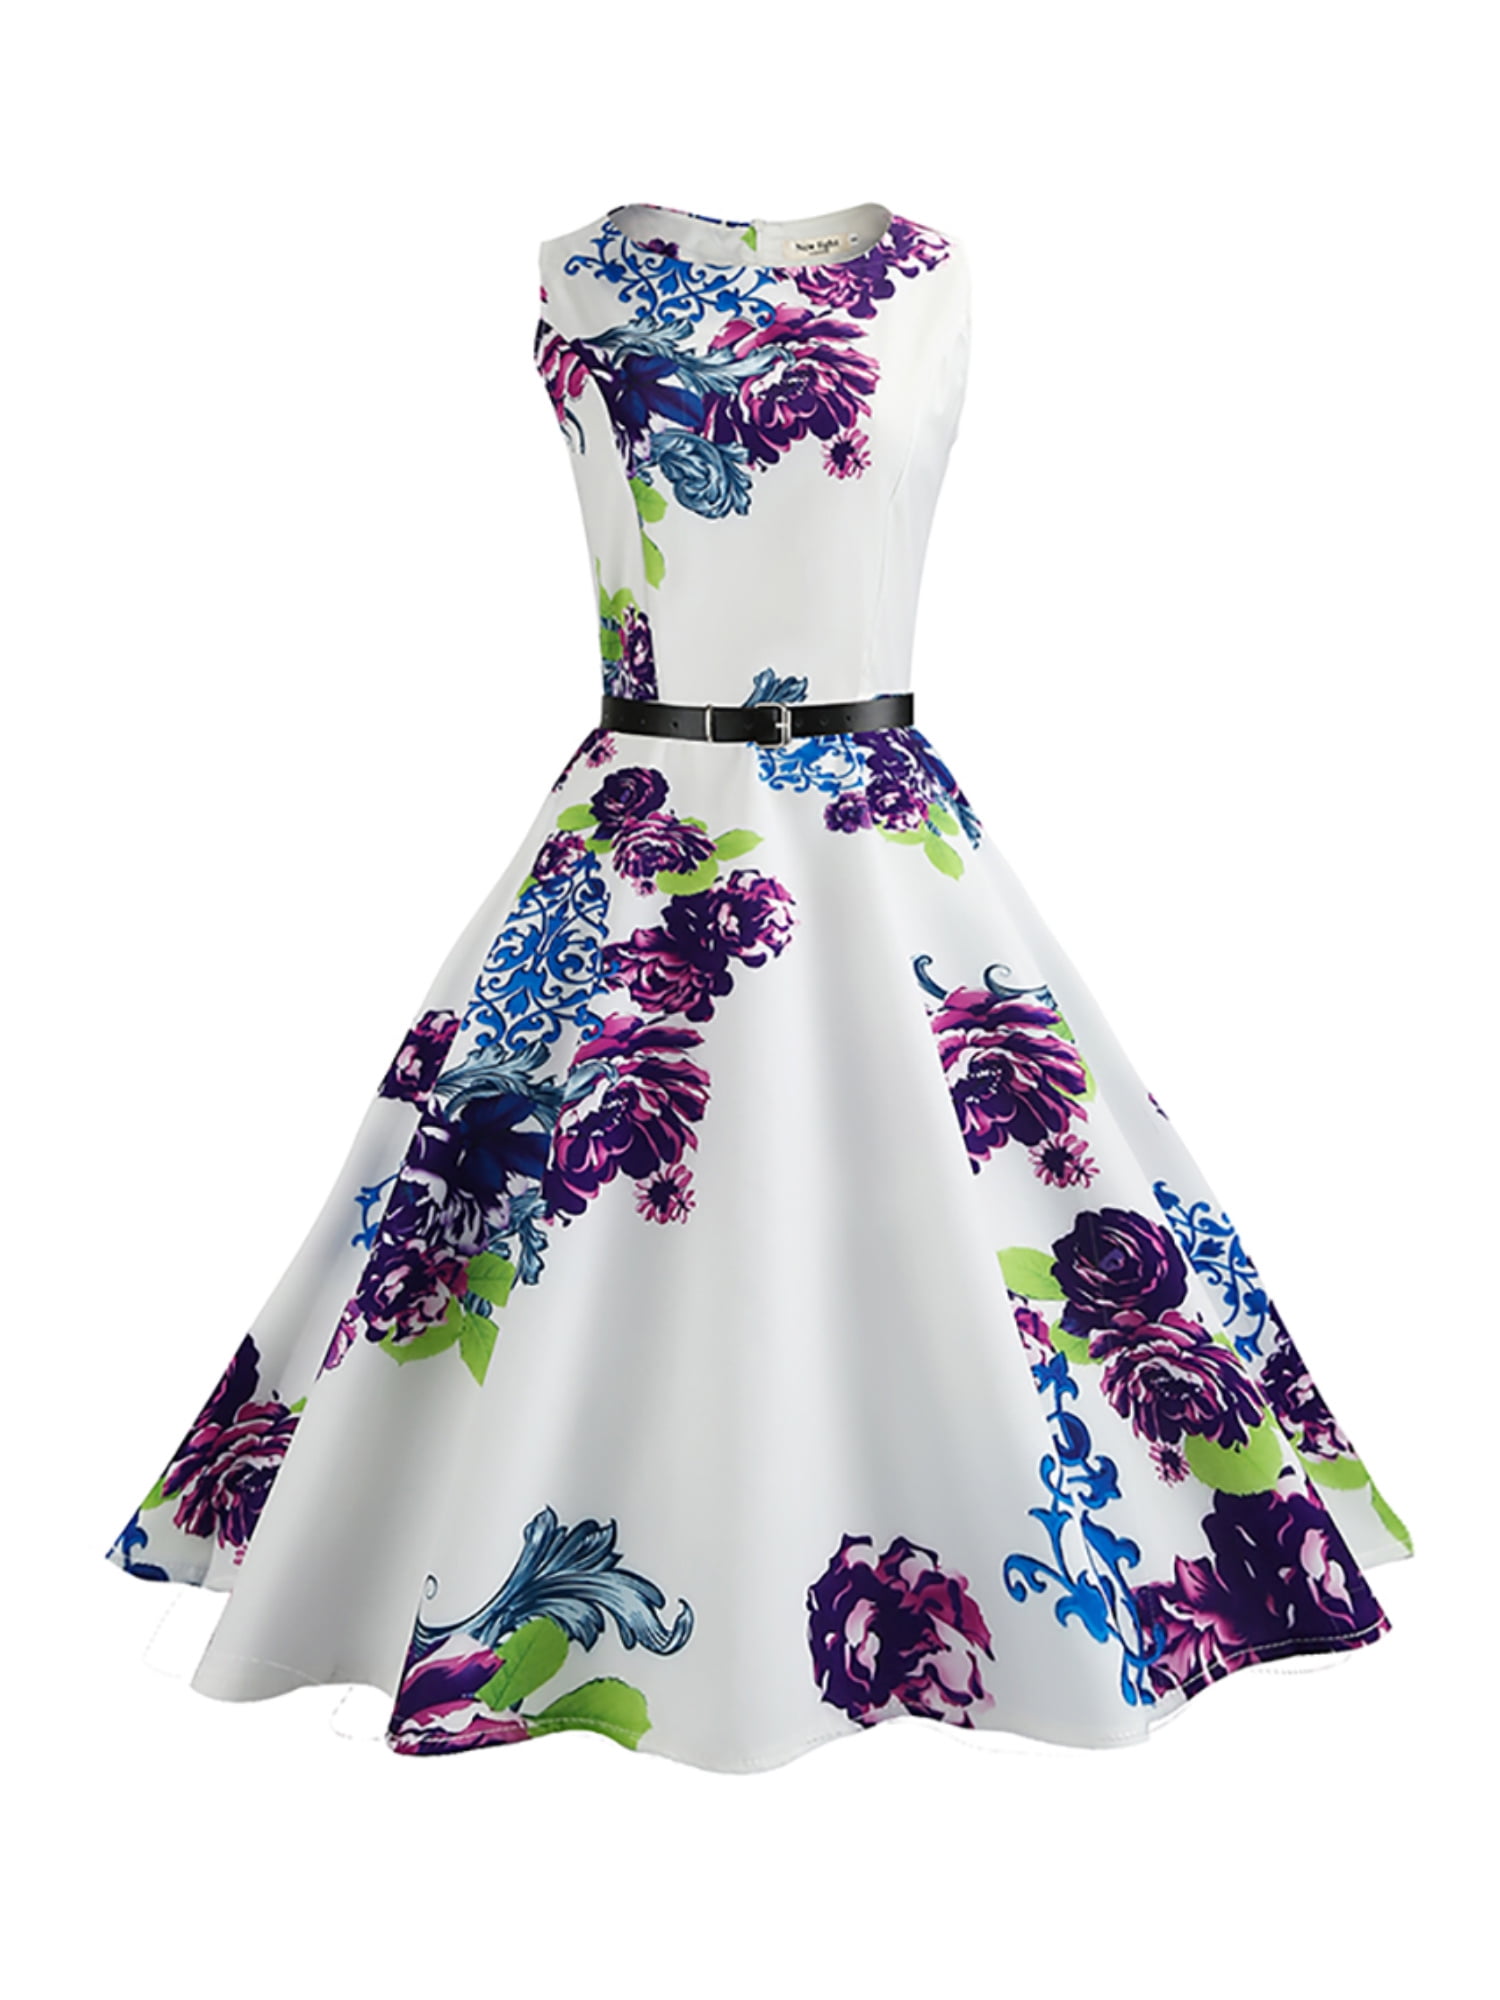 Women's Vintage Style Dresses 1950s Floral Tea Dress Sleeveless Party ...